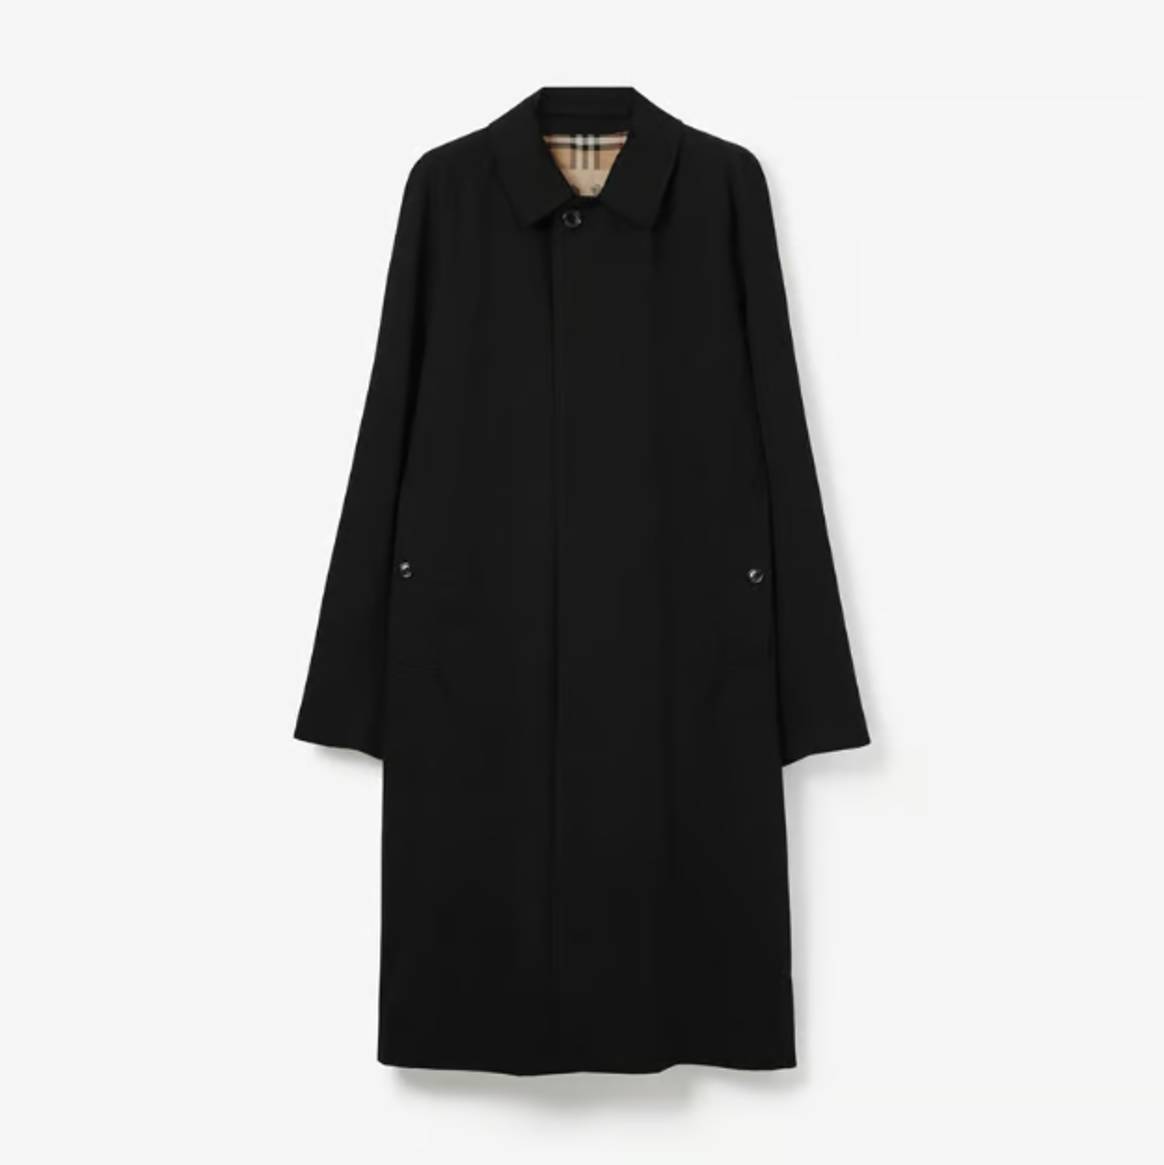 Item of the week: the long black coat